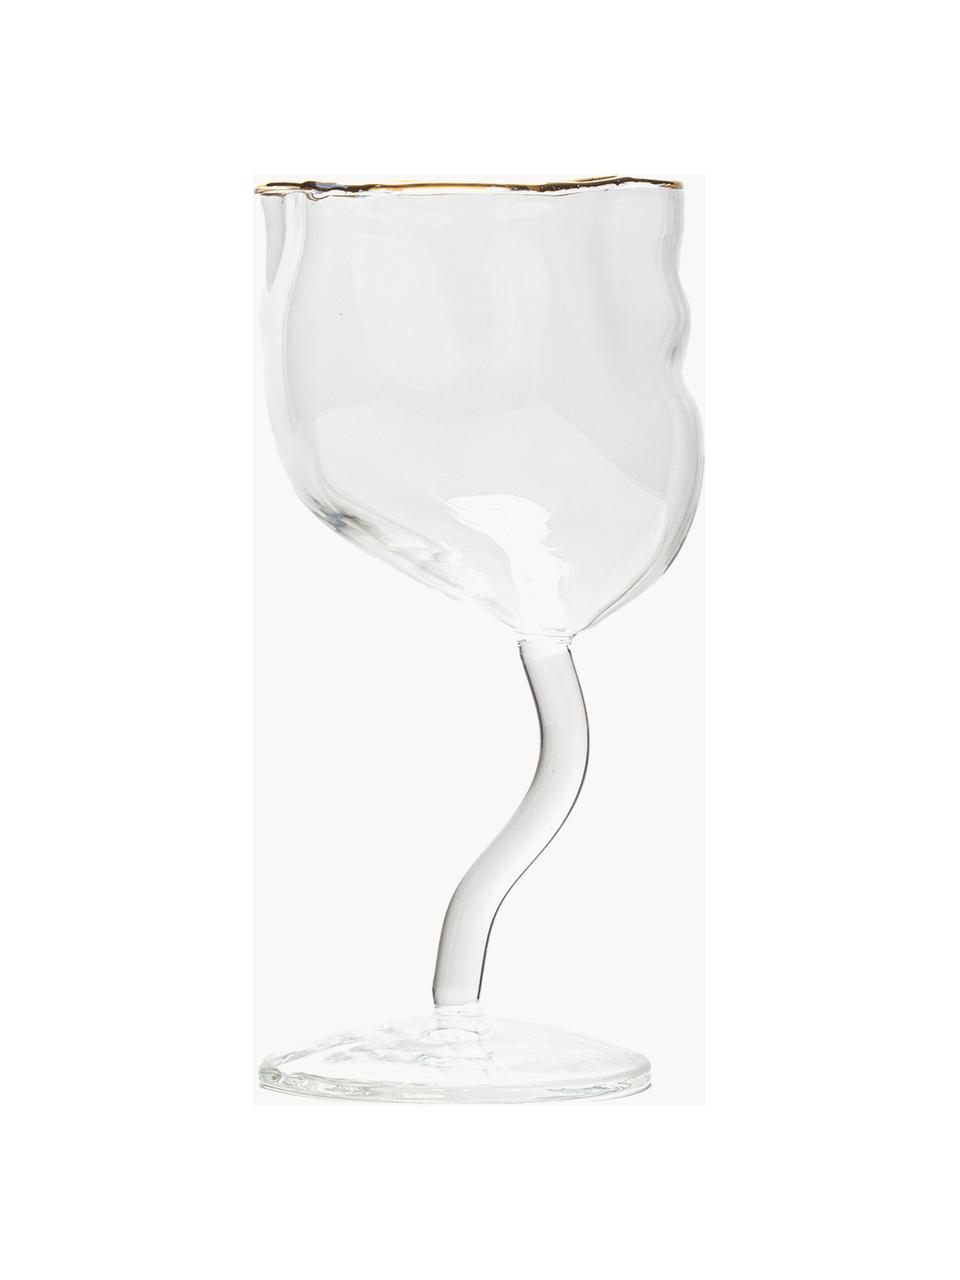 Weinglas Classic On Acid mit Gold-Dekor, Rand: Gold, Transparent, Ø 9 x H 17 cm, 250 ml